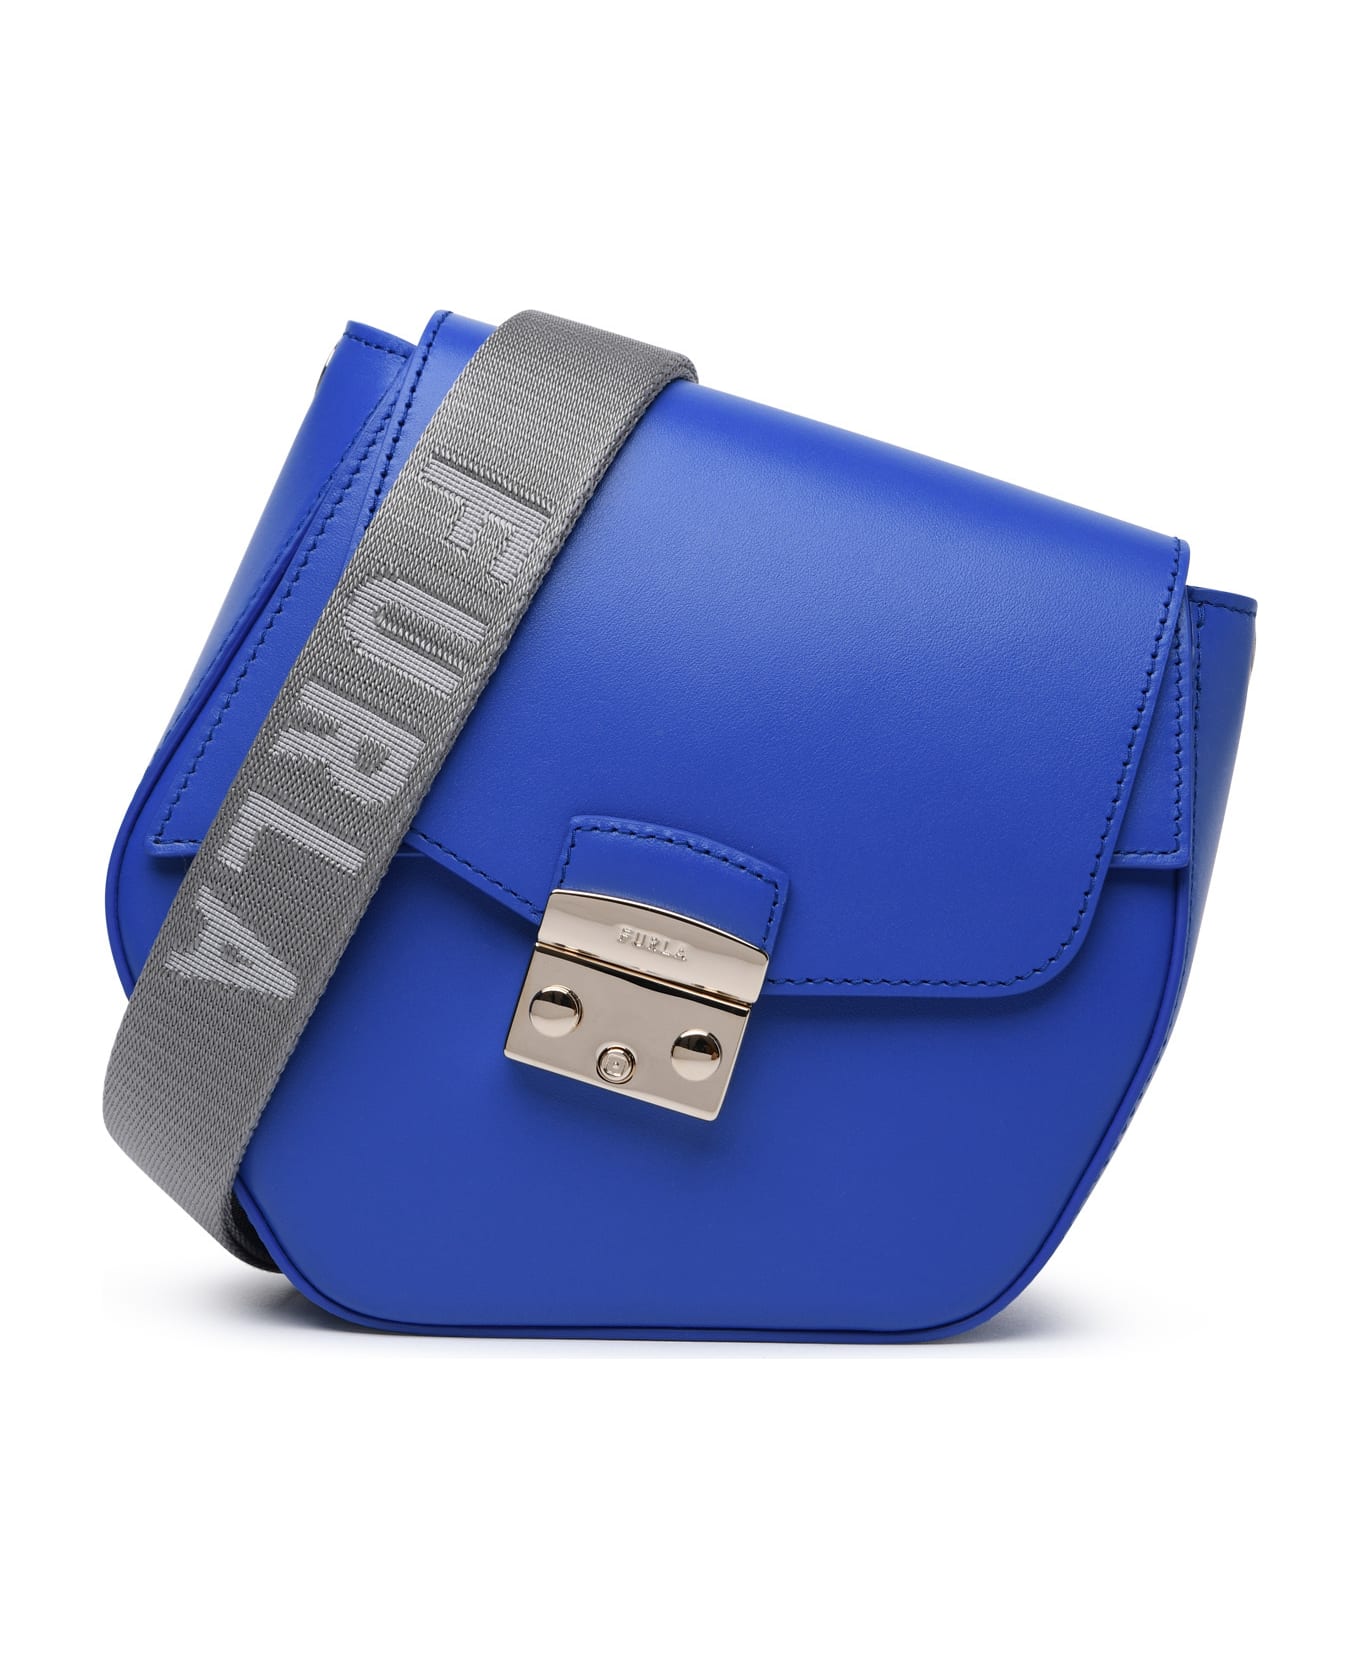 Furla 'metropolis Prisma' Blue Leather Blend Bag - S Blu Cobalto トートバッグ